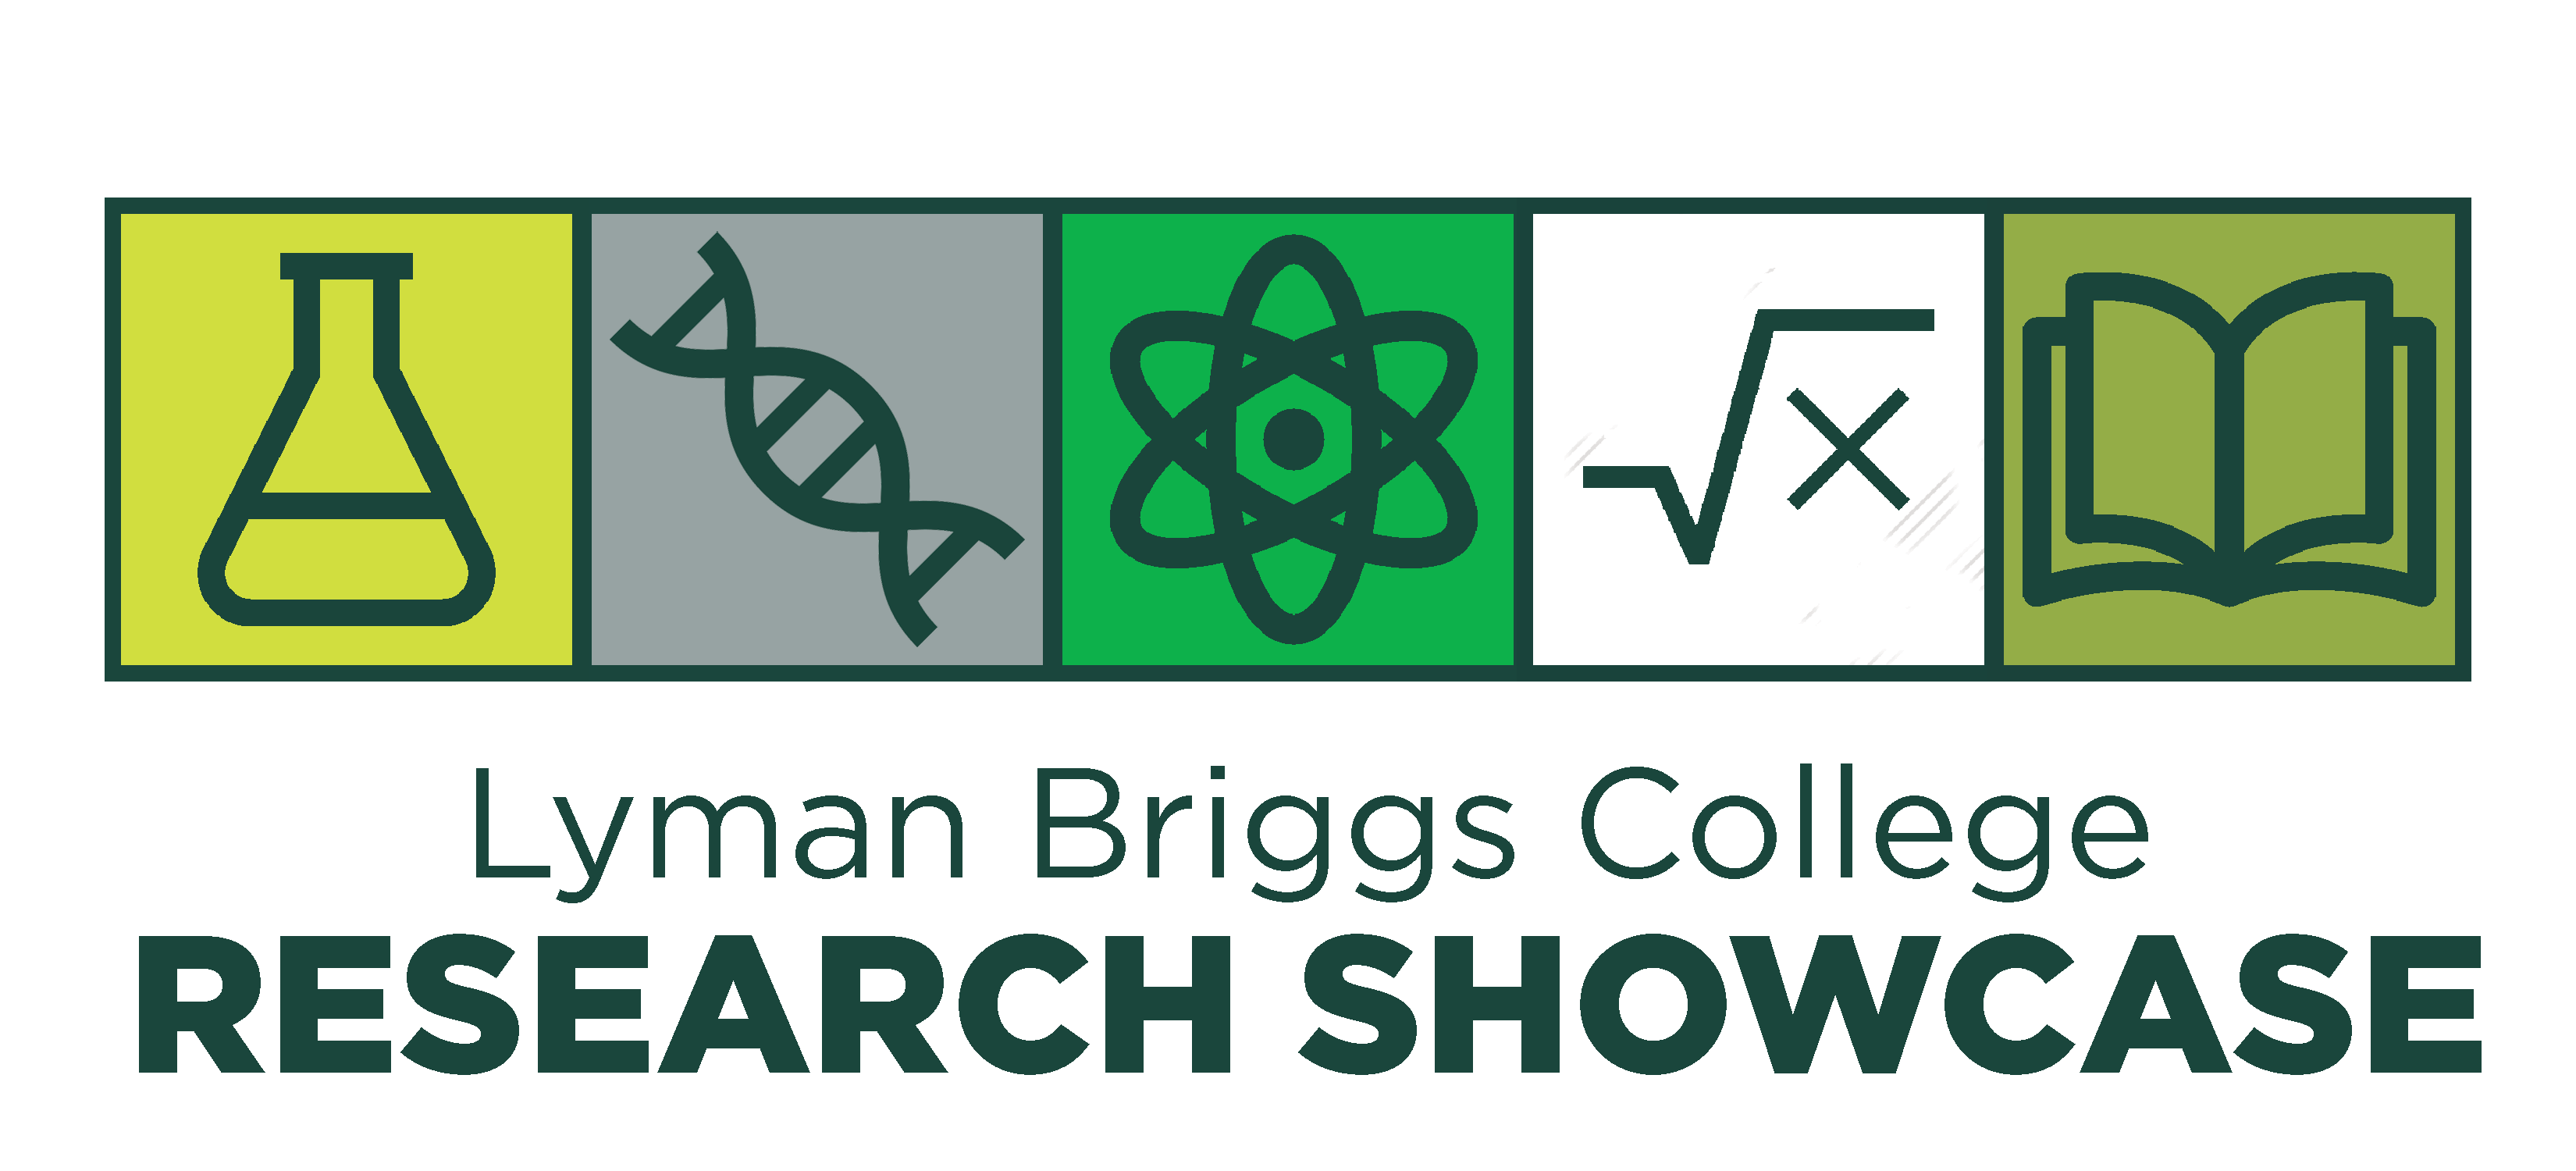 LBC hosts is 17th annual Research Showcase Feb. 15, 6-7:30 p.m.